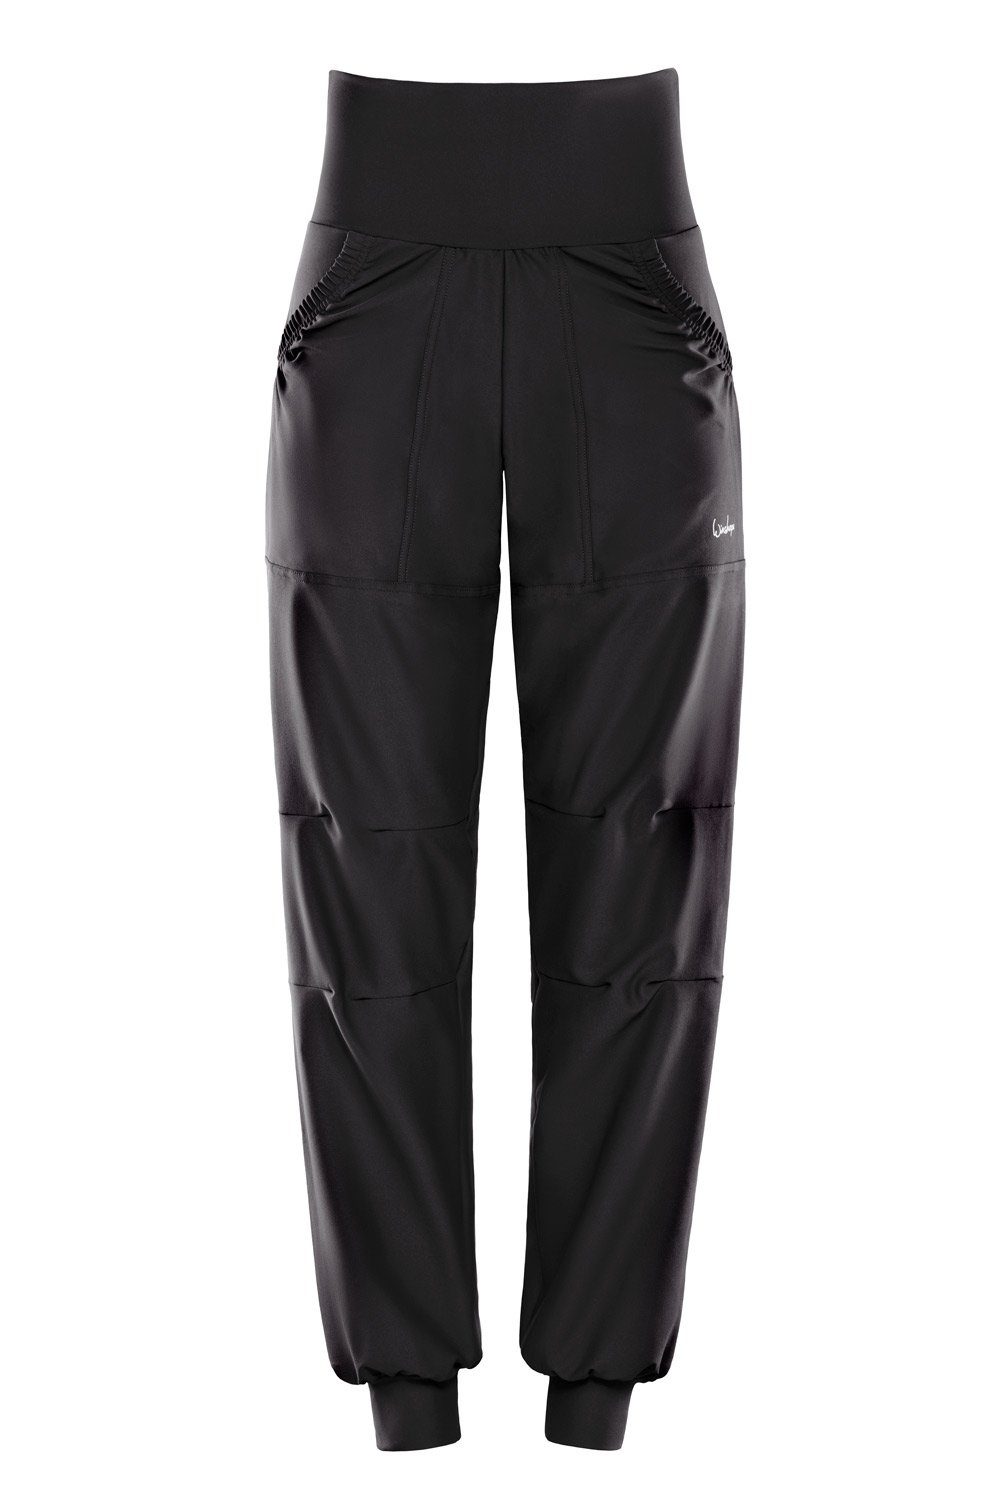 Winshape Sporthose Functional Comfort Leisure Time Trousers LEI101C High Waist schwarz | Turnhosen